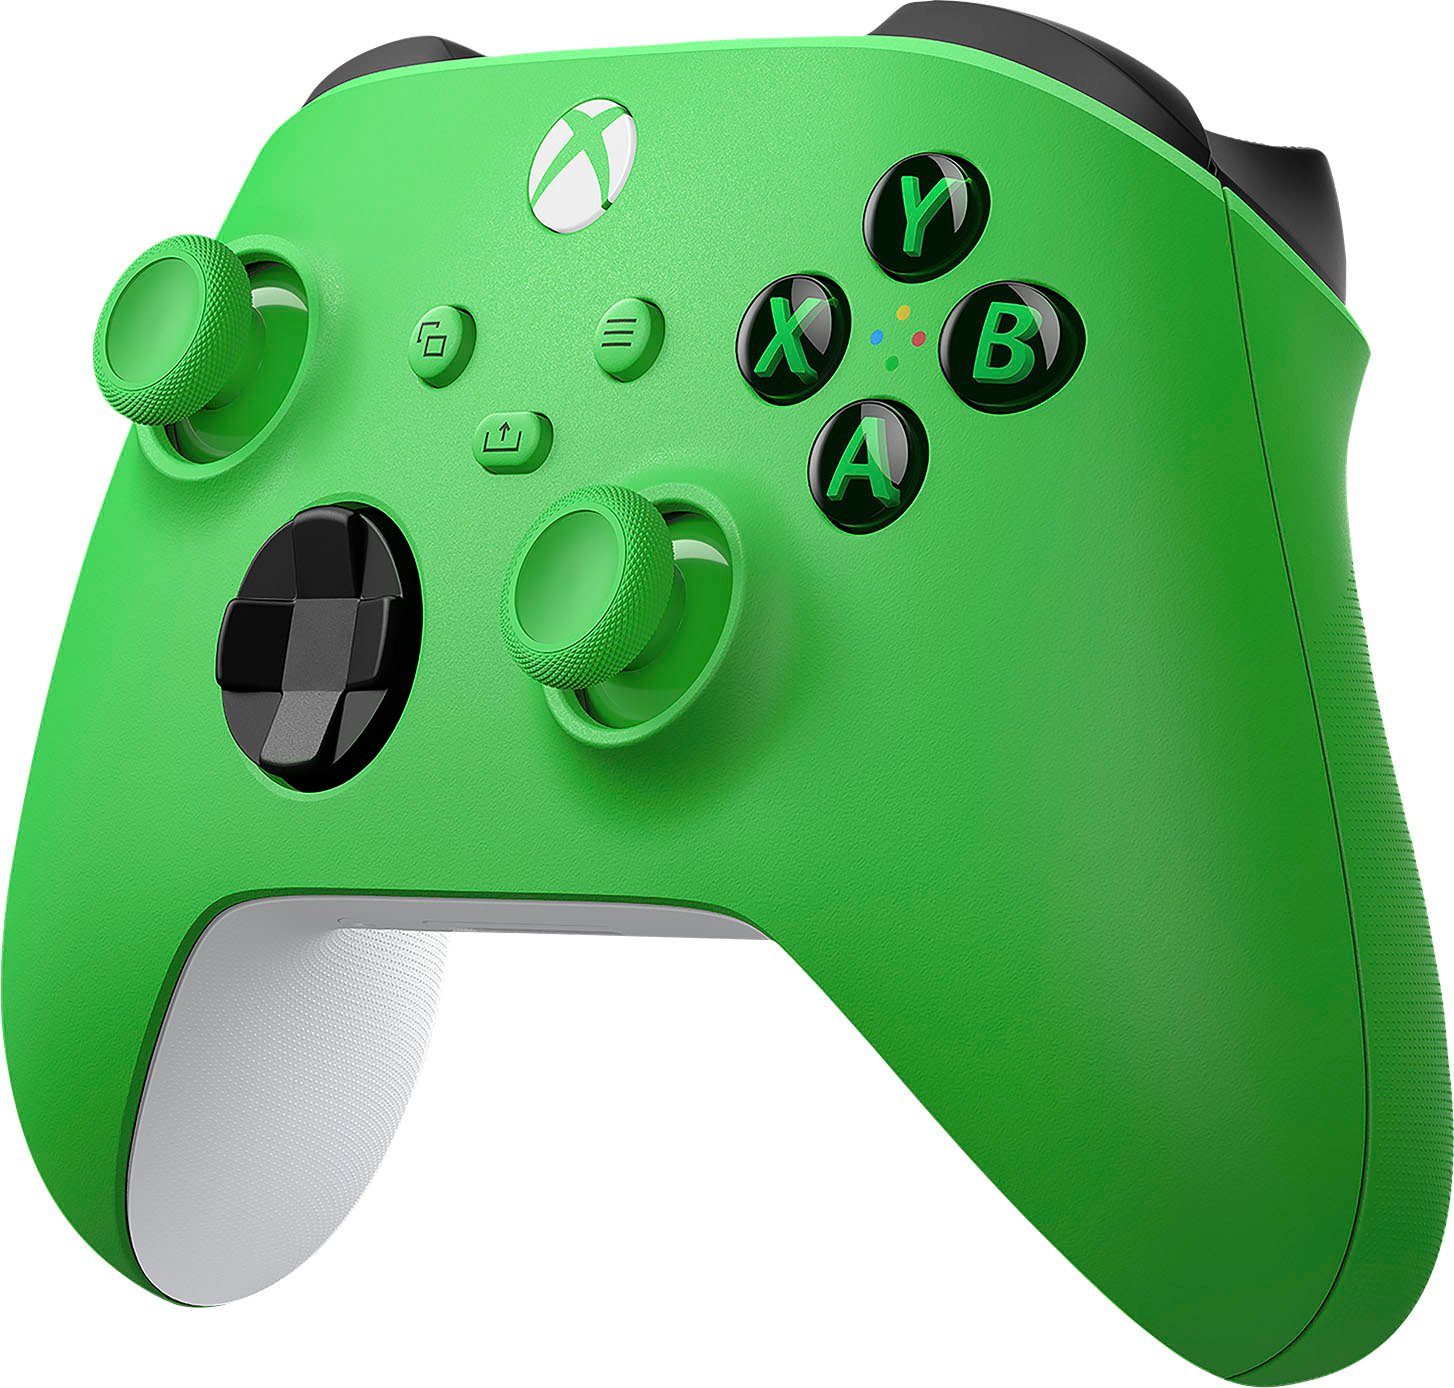 Wireless-Controller Velocity Xbox Green